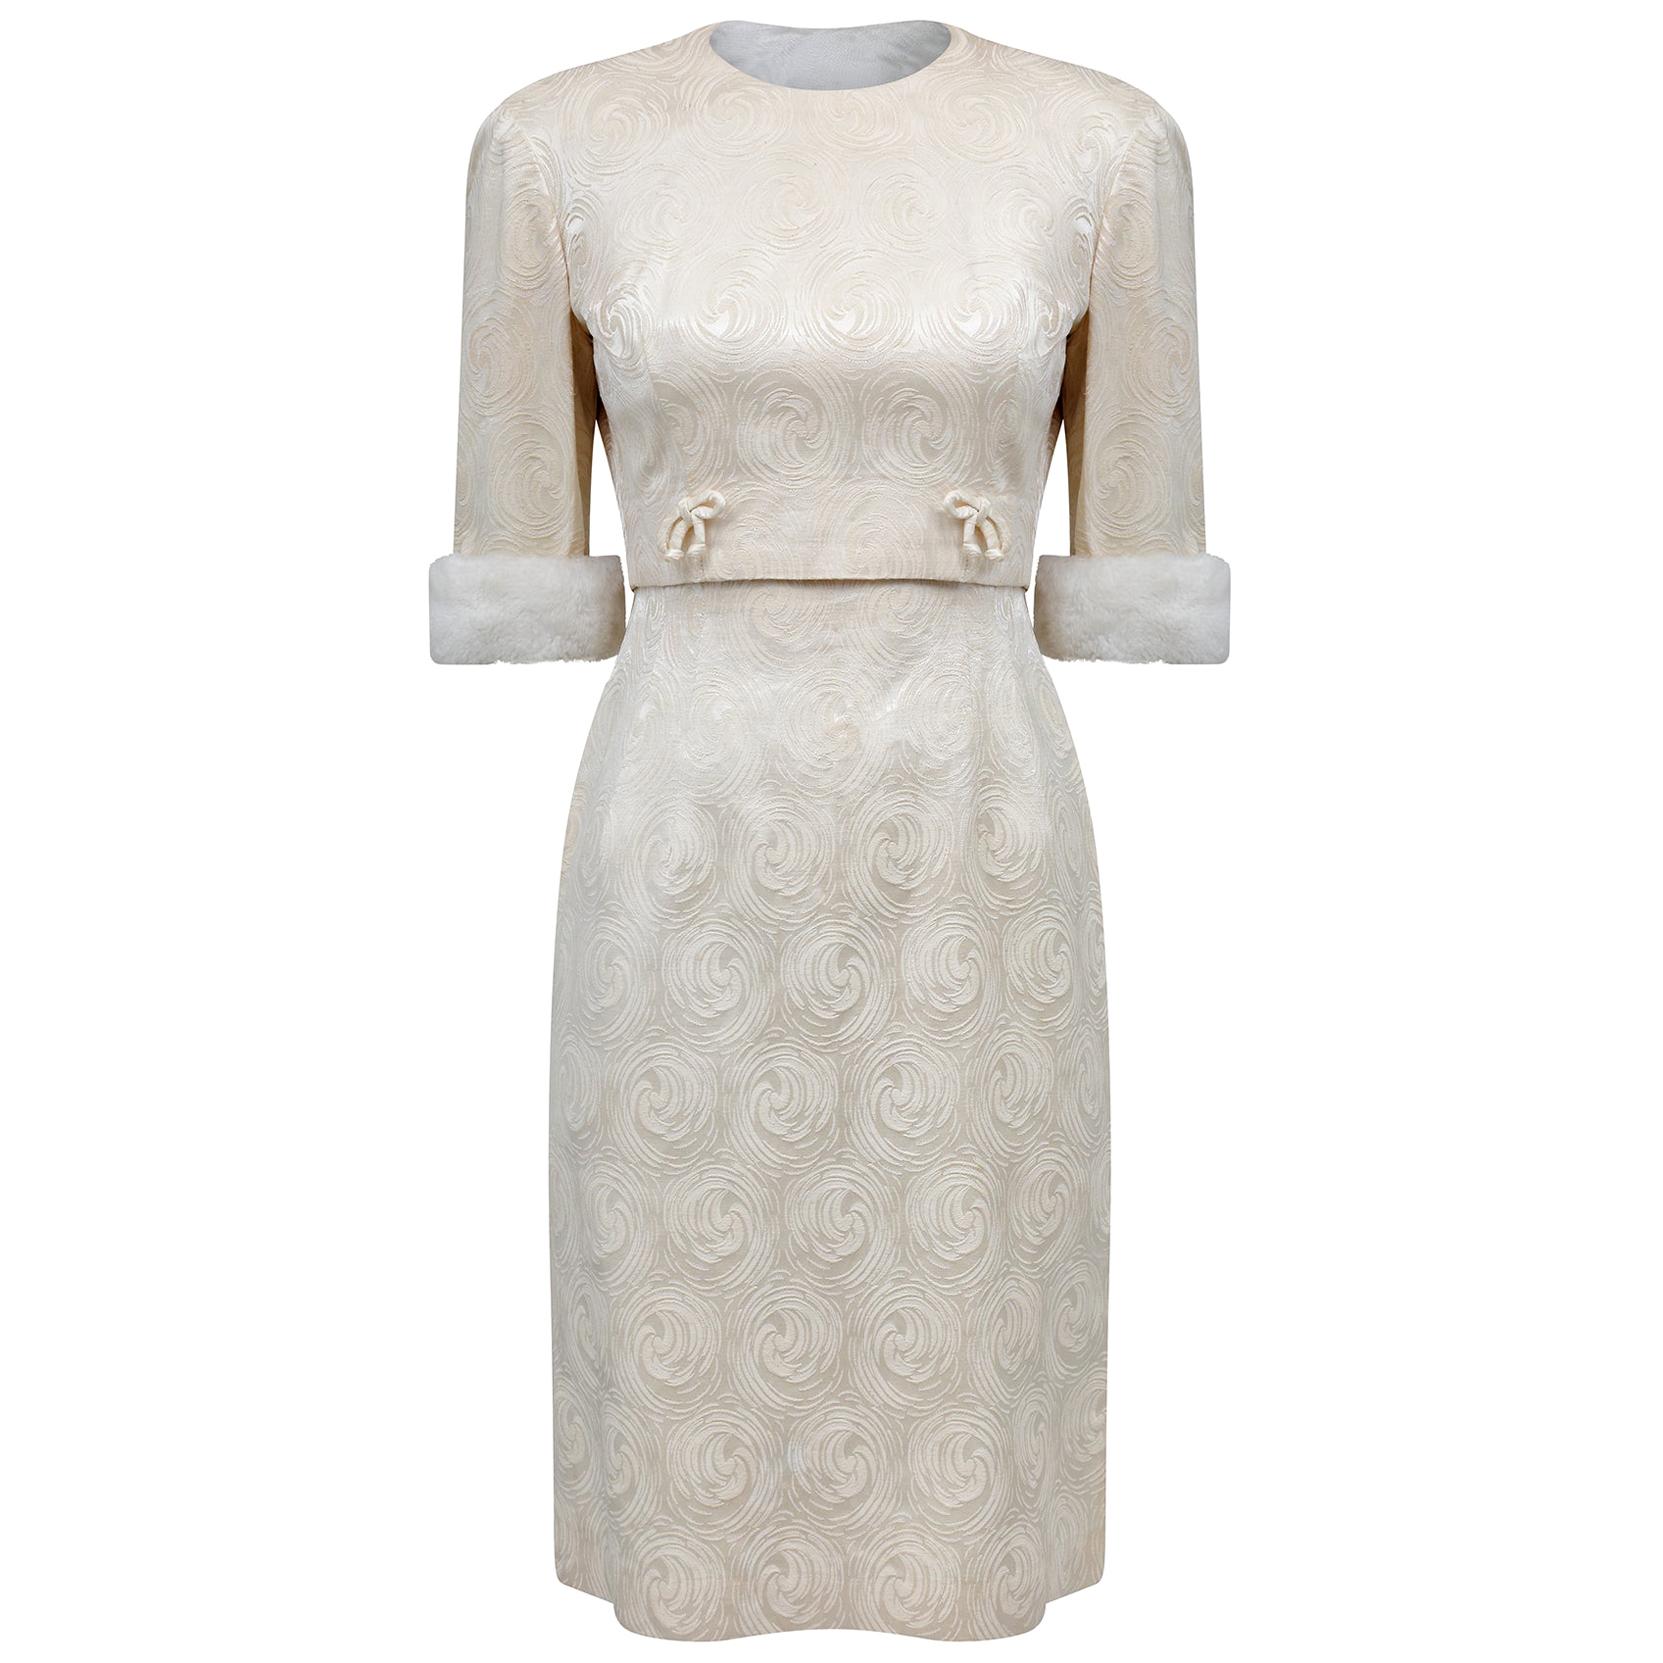 1960s Carol Brent Jackie Kennedy Style Ivory Brocade Dress Suit